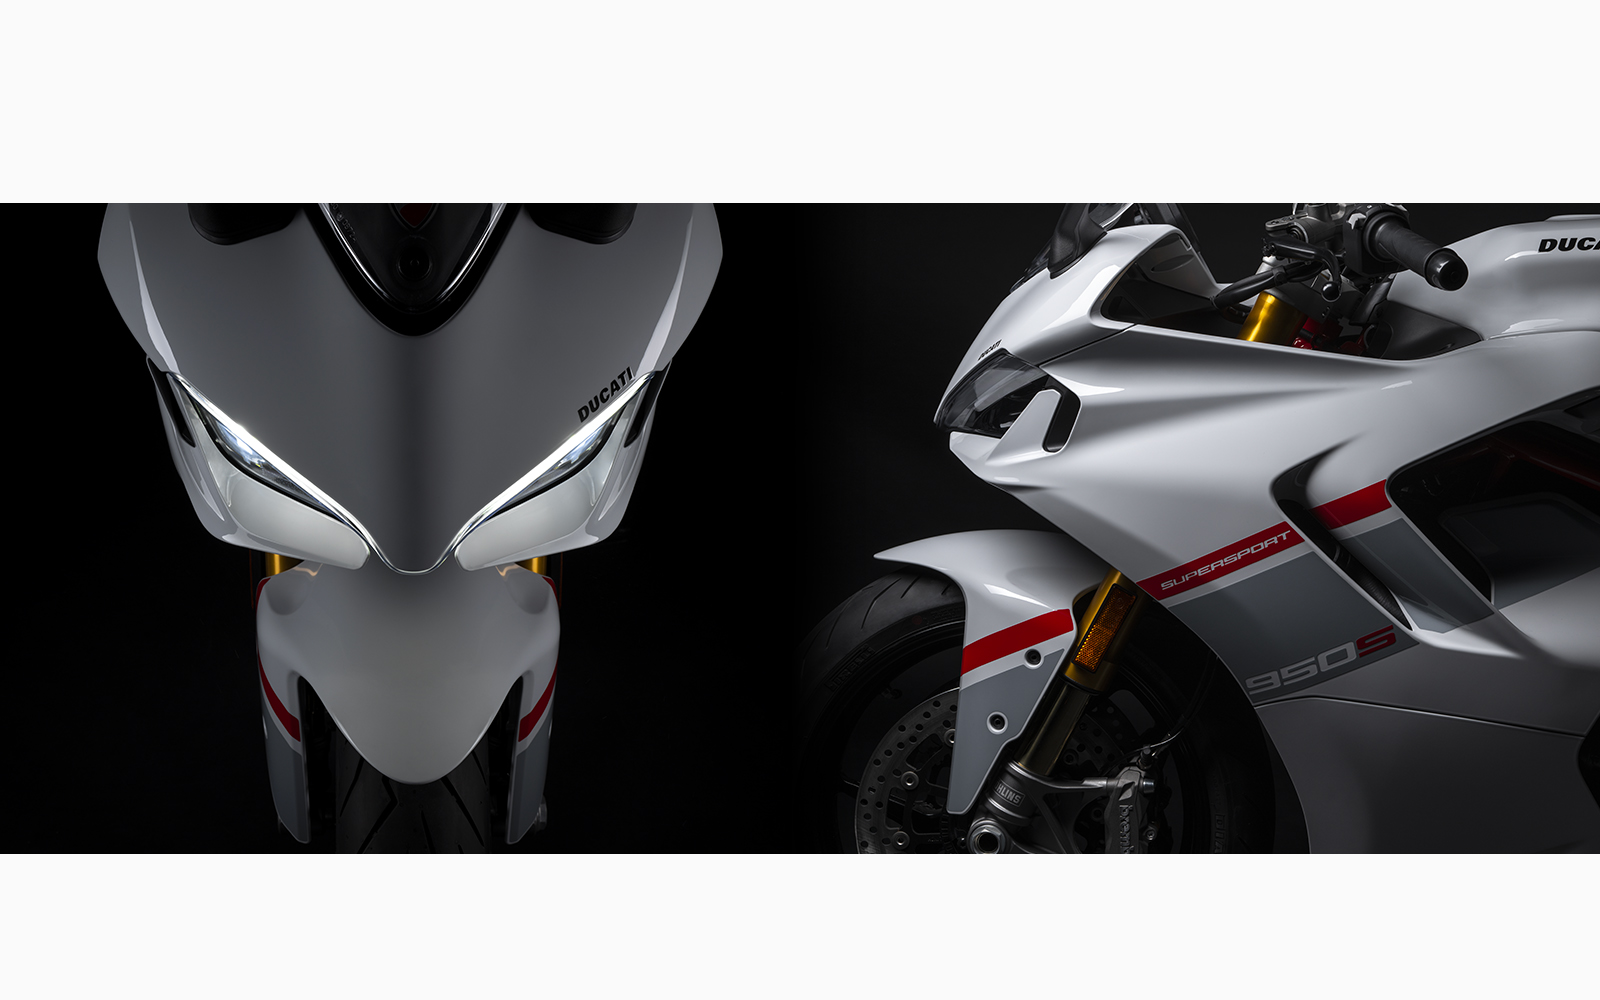 Sportbike or Sporty-bike? We Ride Ducati's SuperSport S